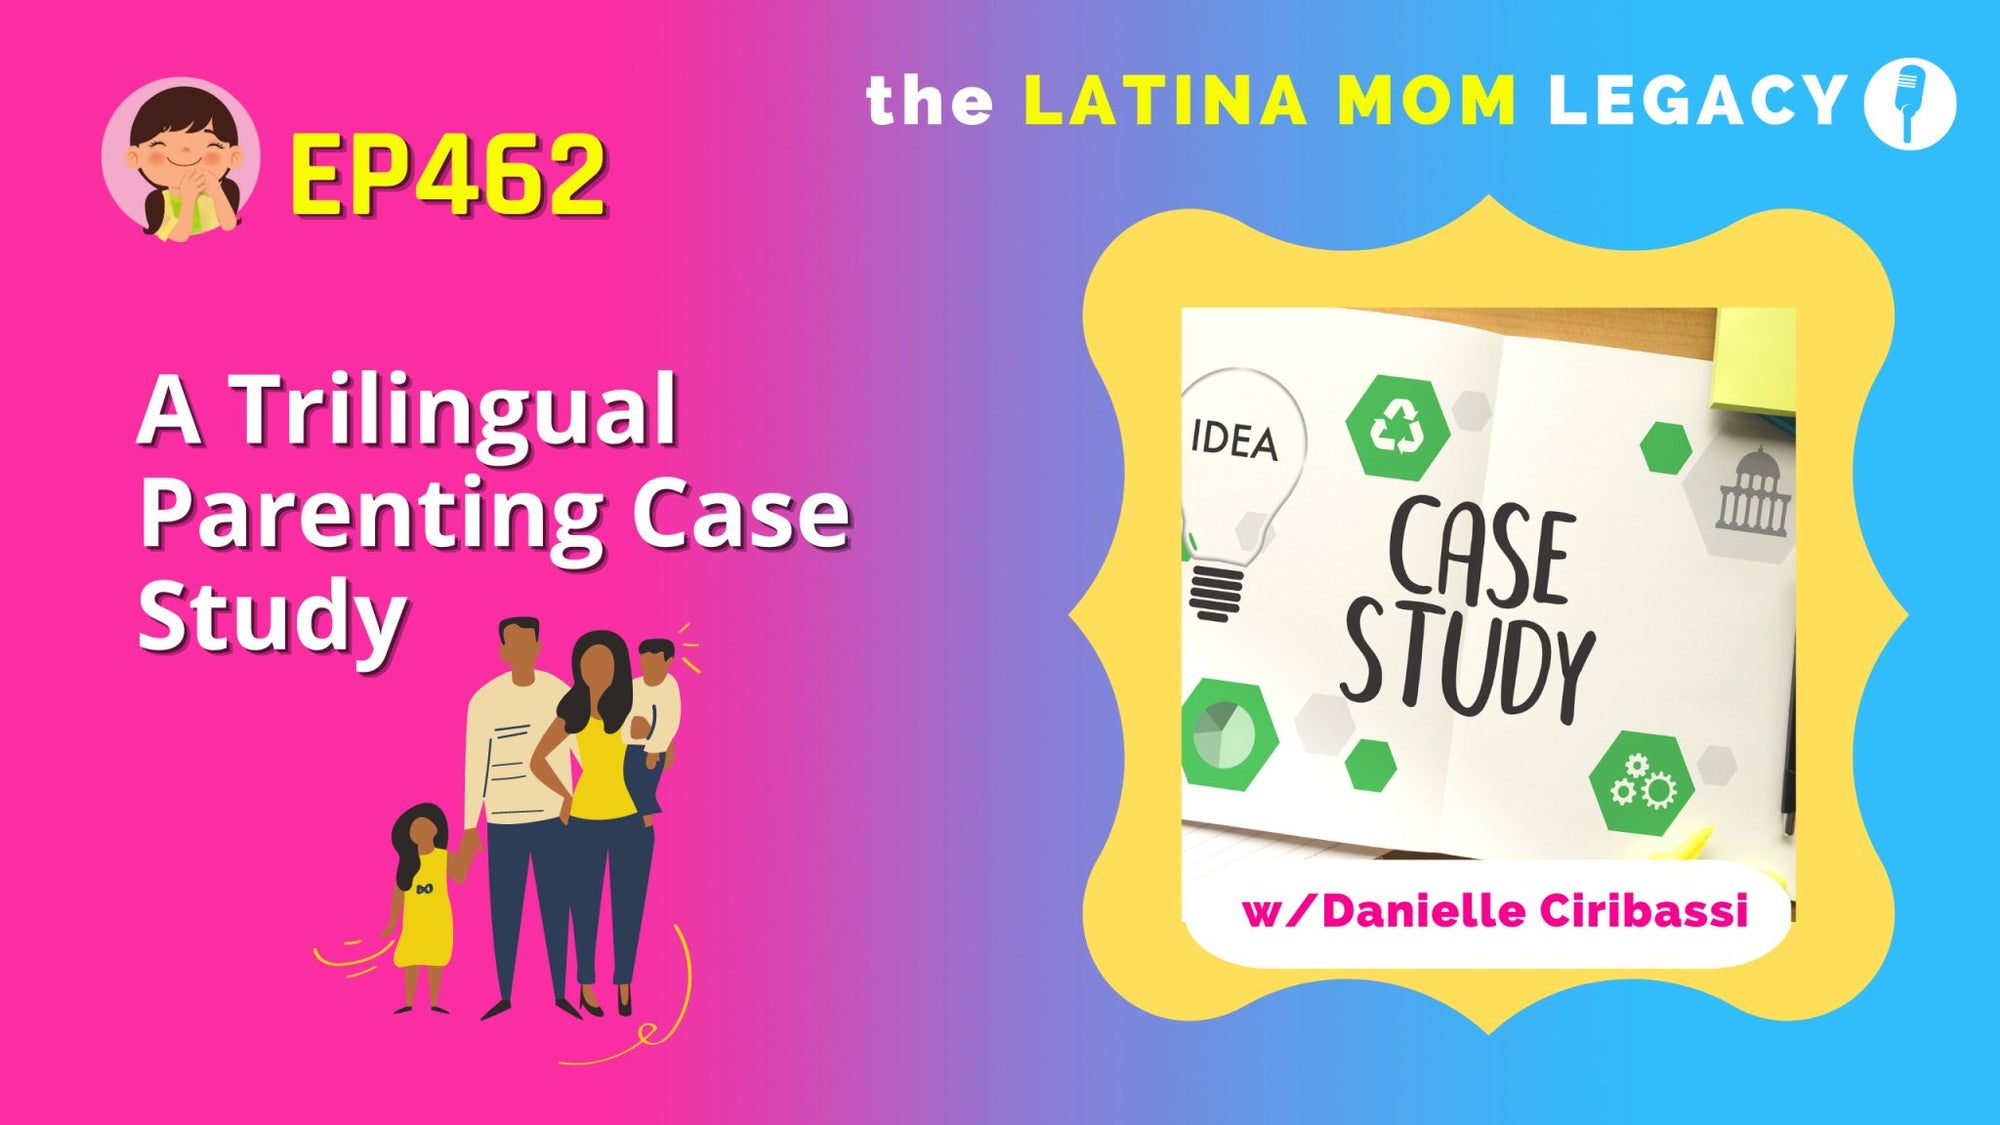 462 - Danielle Ciribassi A Trilingual Parenting Case Study - Mi LegaSi